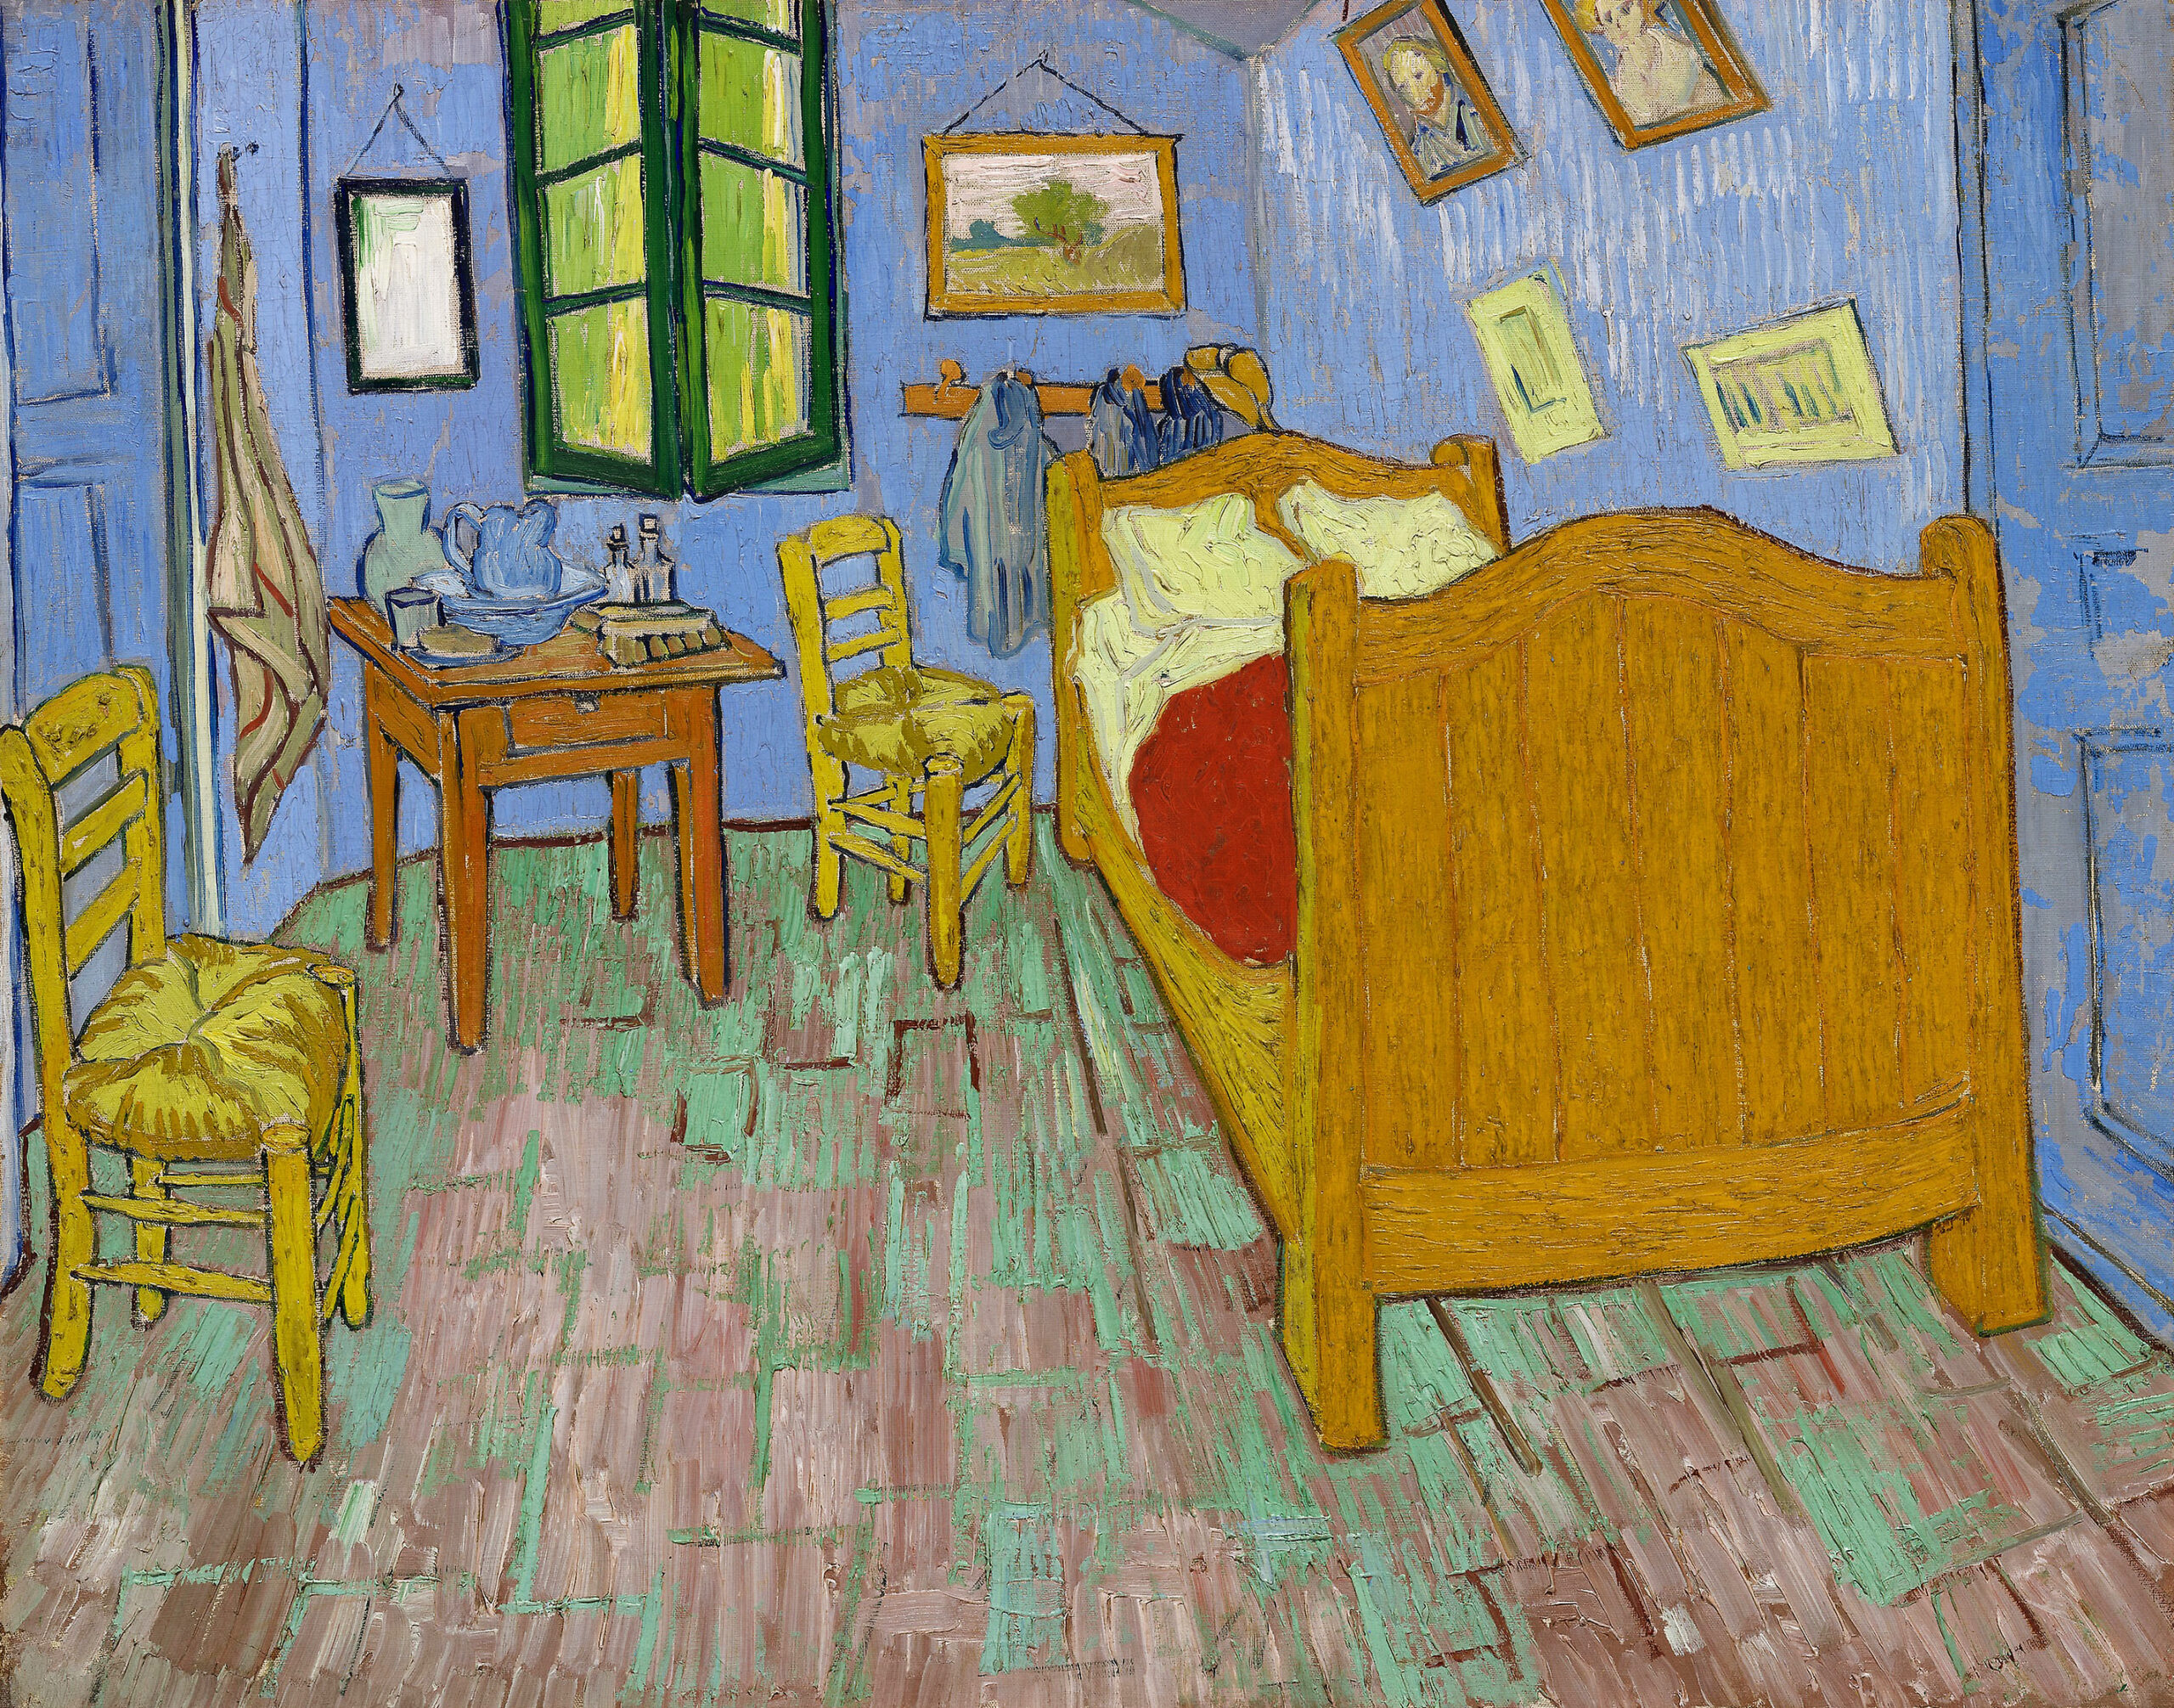 The Bedroom (1889) by Vincent Van Gogh.